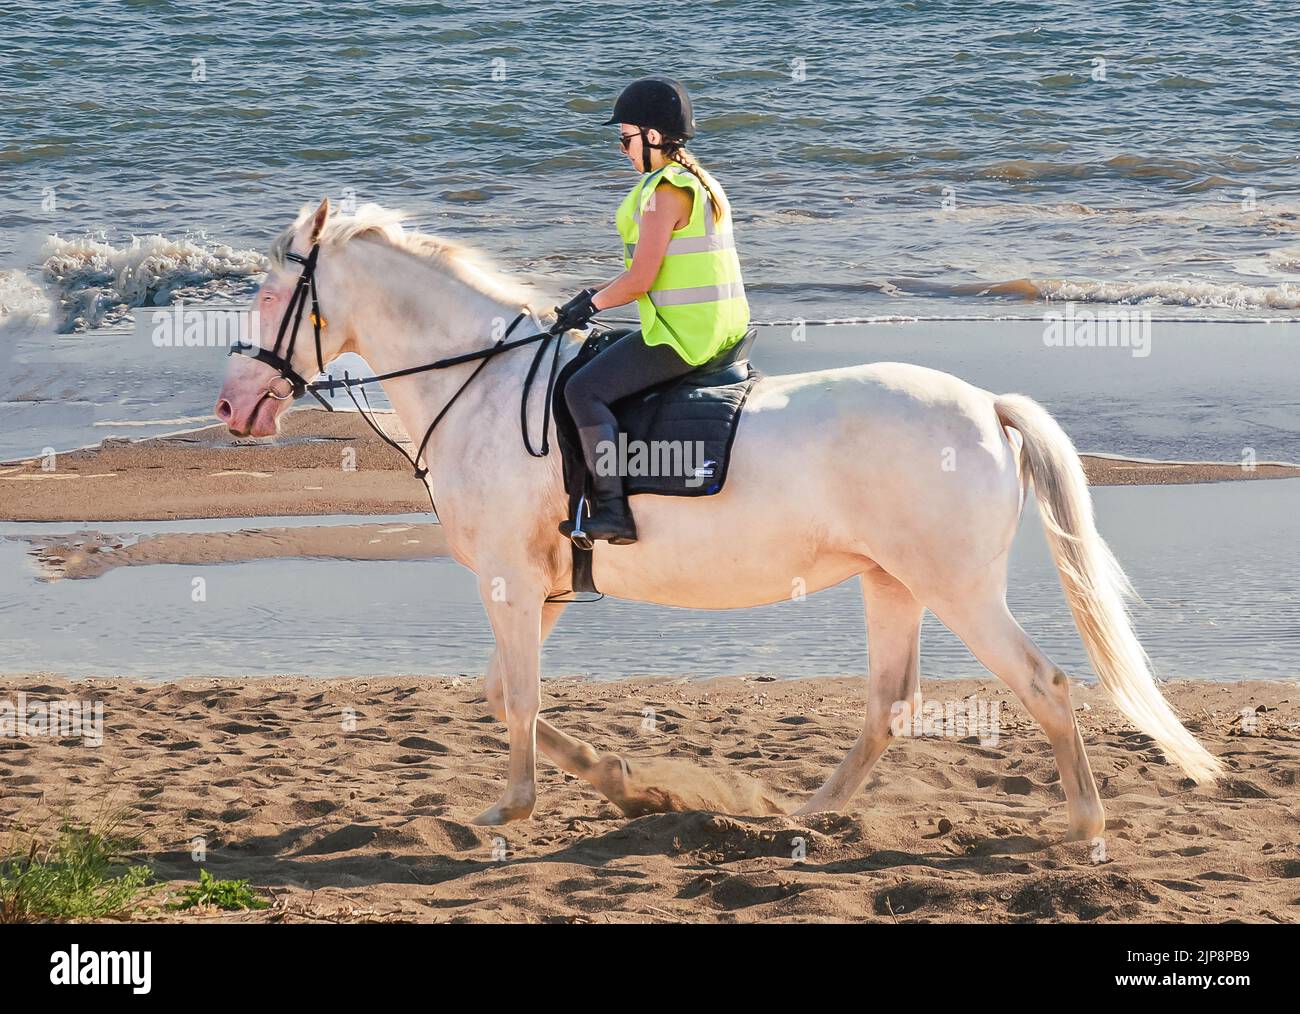 Girl horse riding on beach Stock Photo